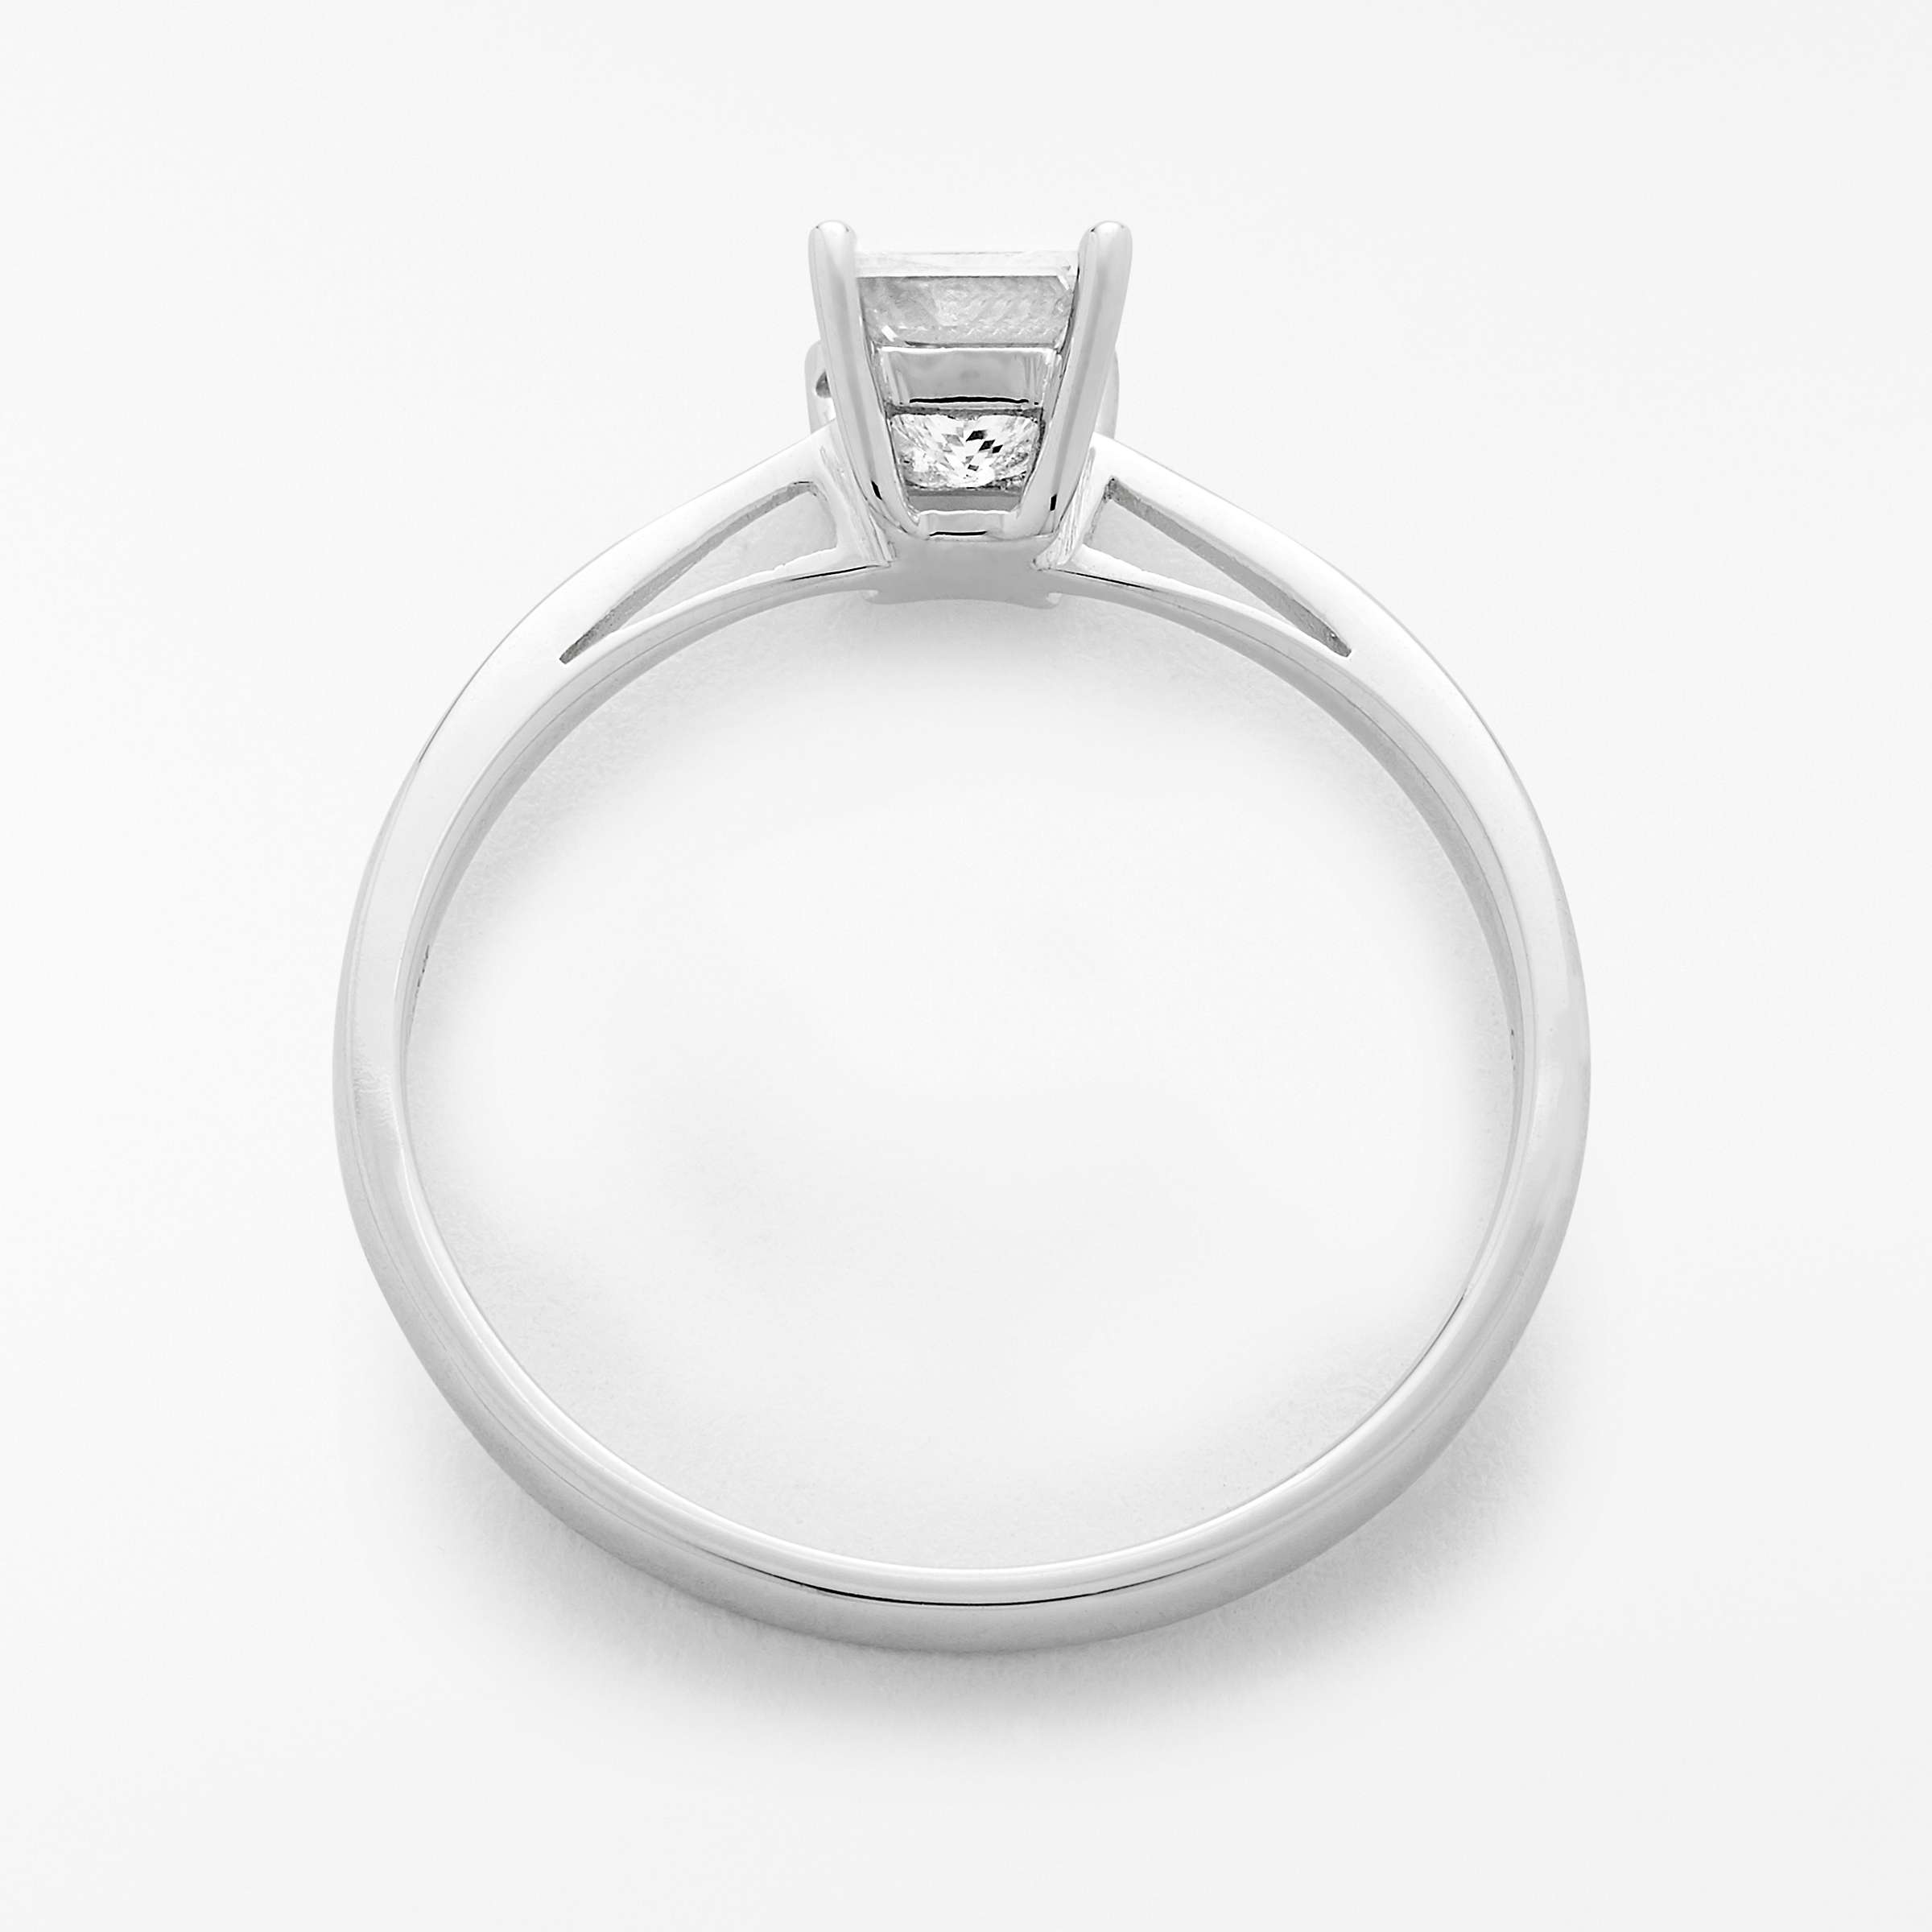 Buy Mogul 18ct White Gold Princess Cut Diamond Engagement Ring, 0.5ct Online at johnlewis.com